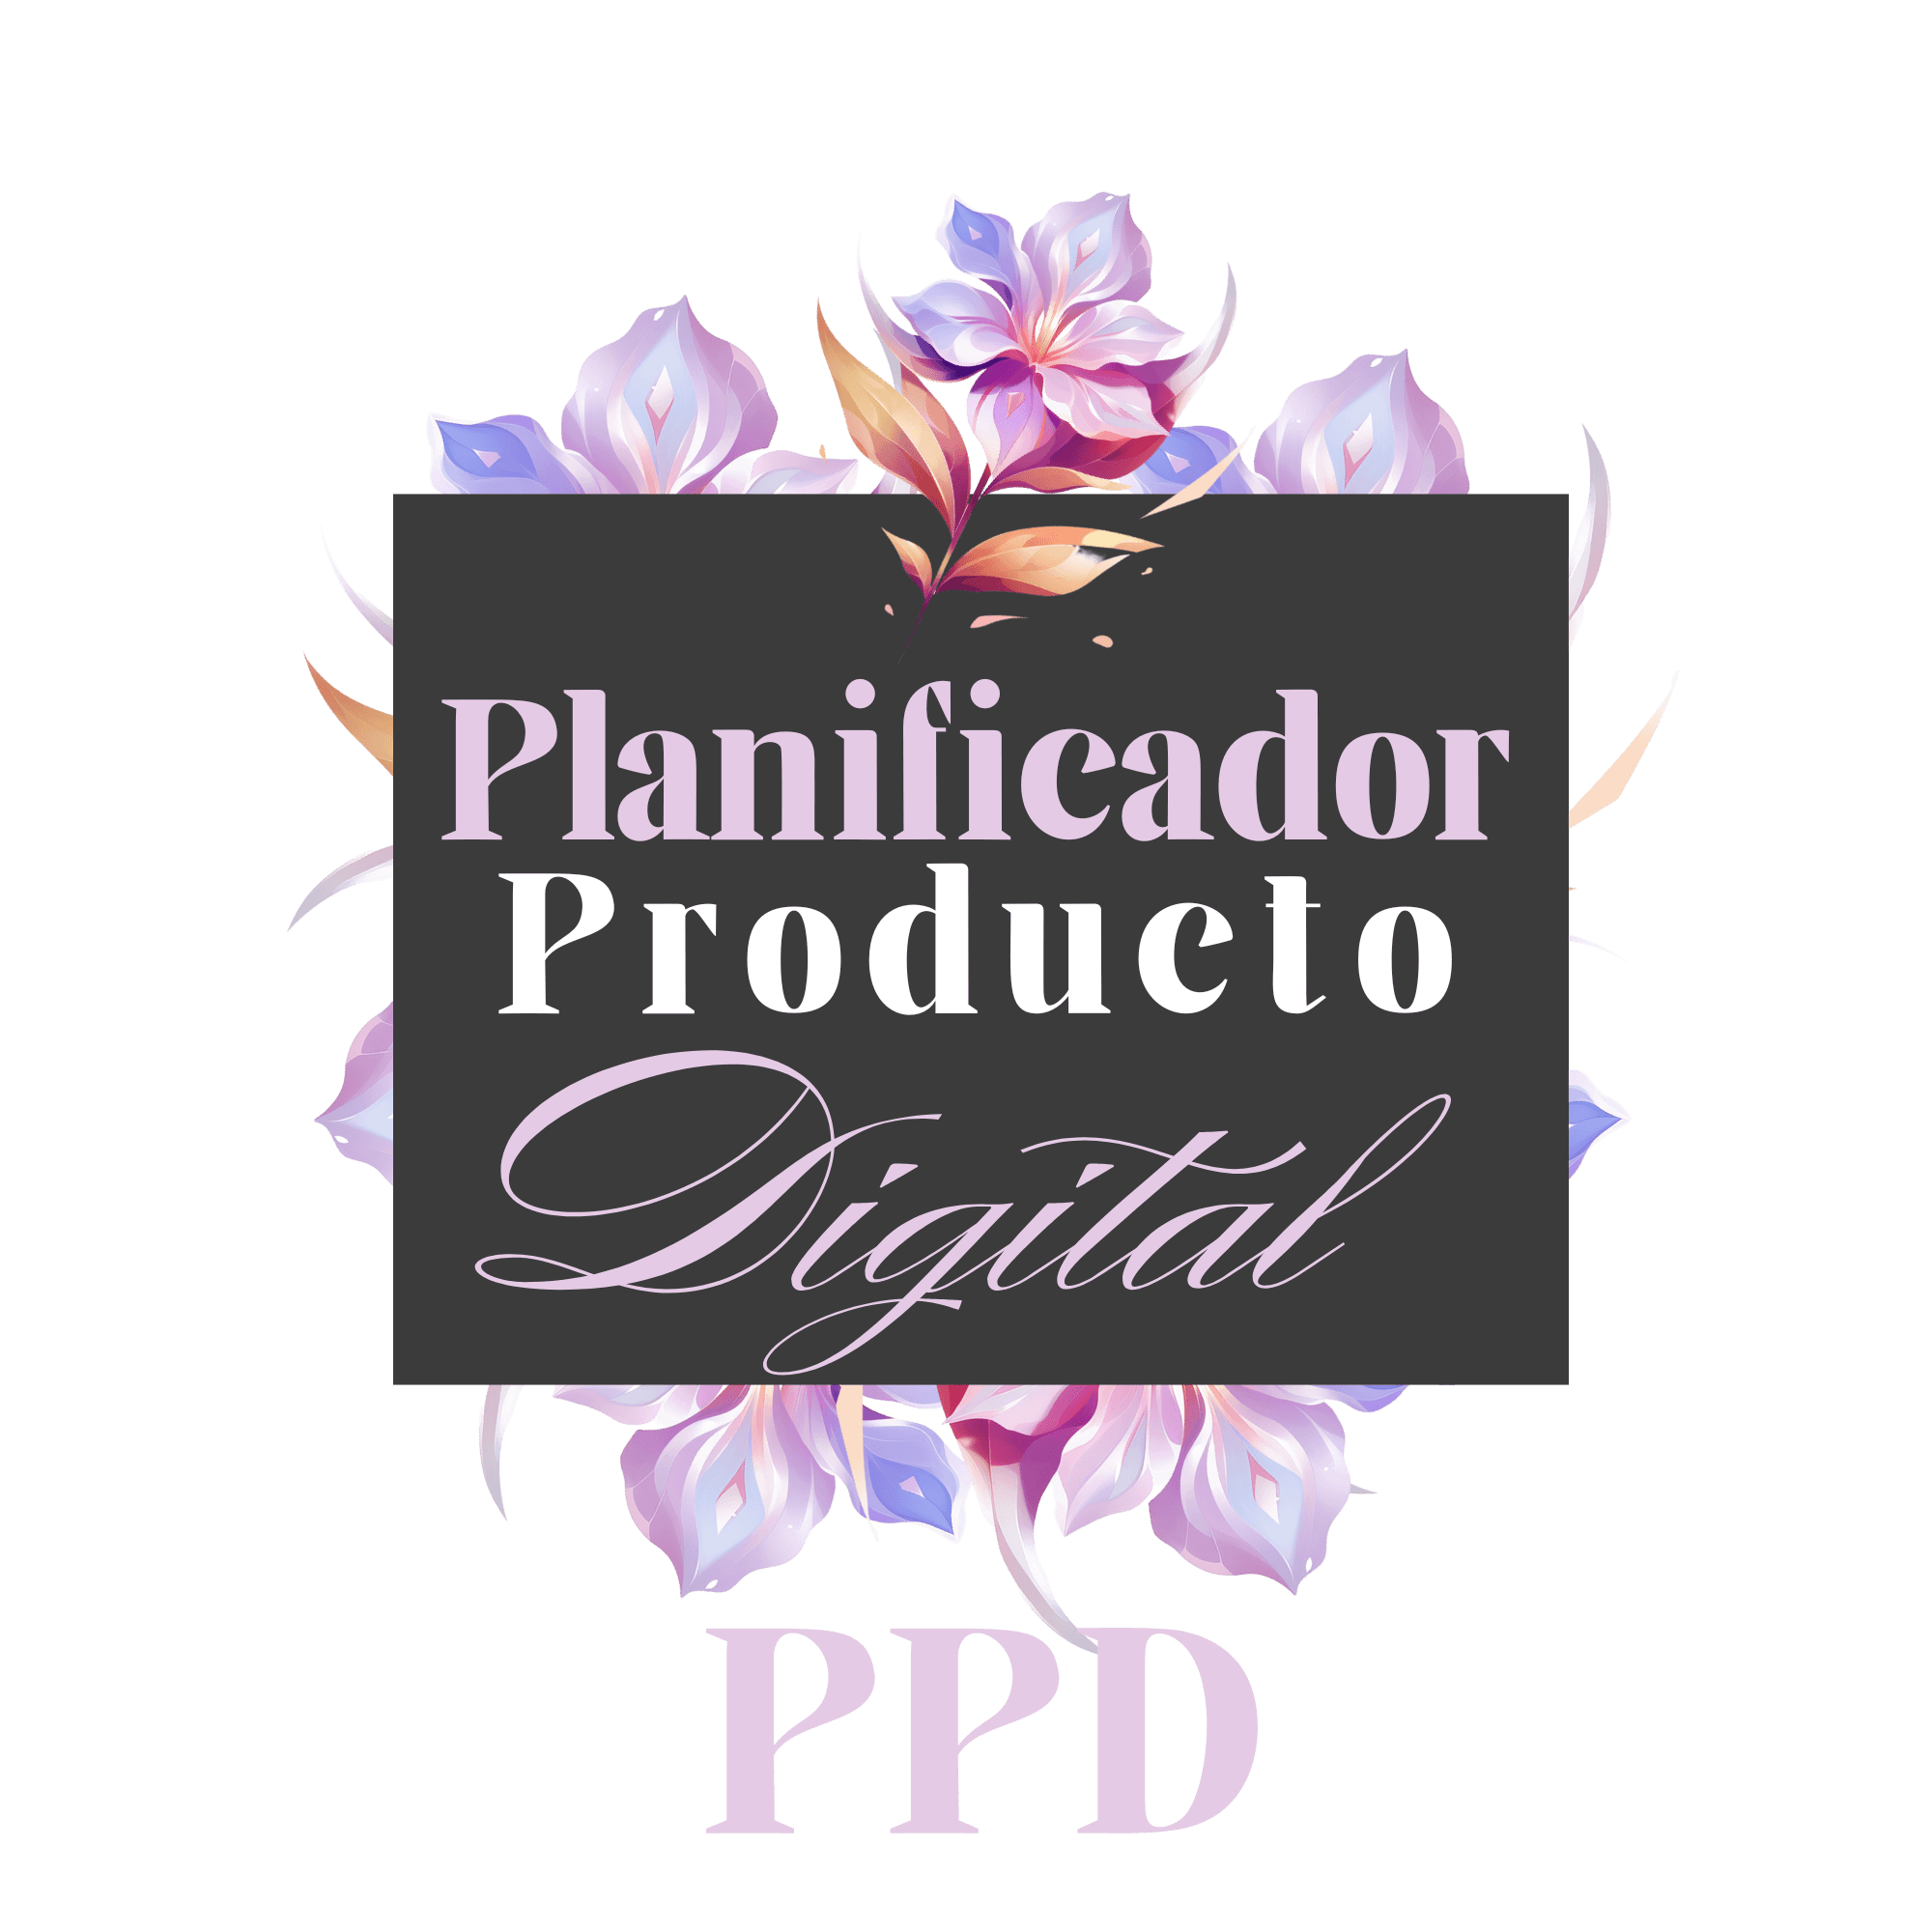 Planificador producto digital PPD